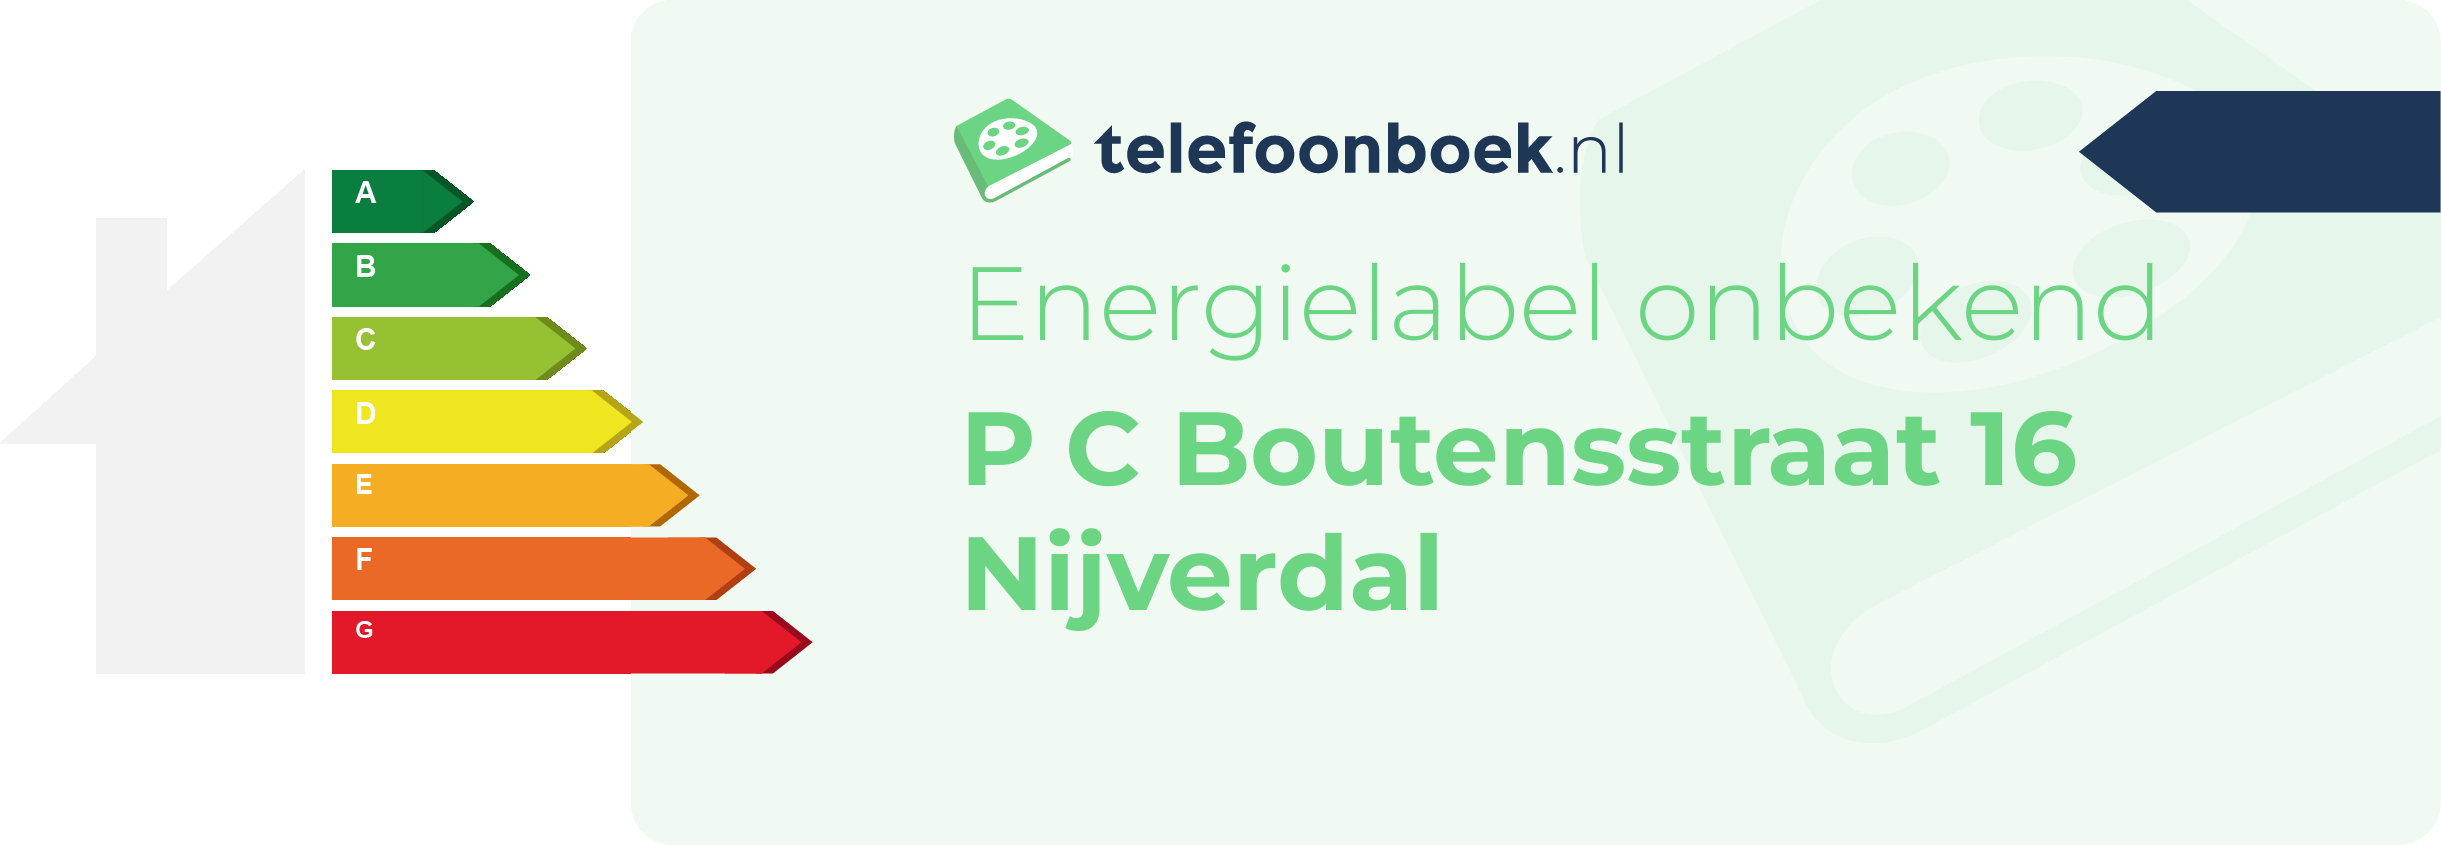 Energielabel P C Boutensstraat 16 Nijverdal